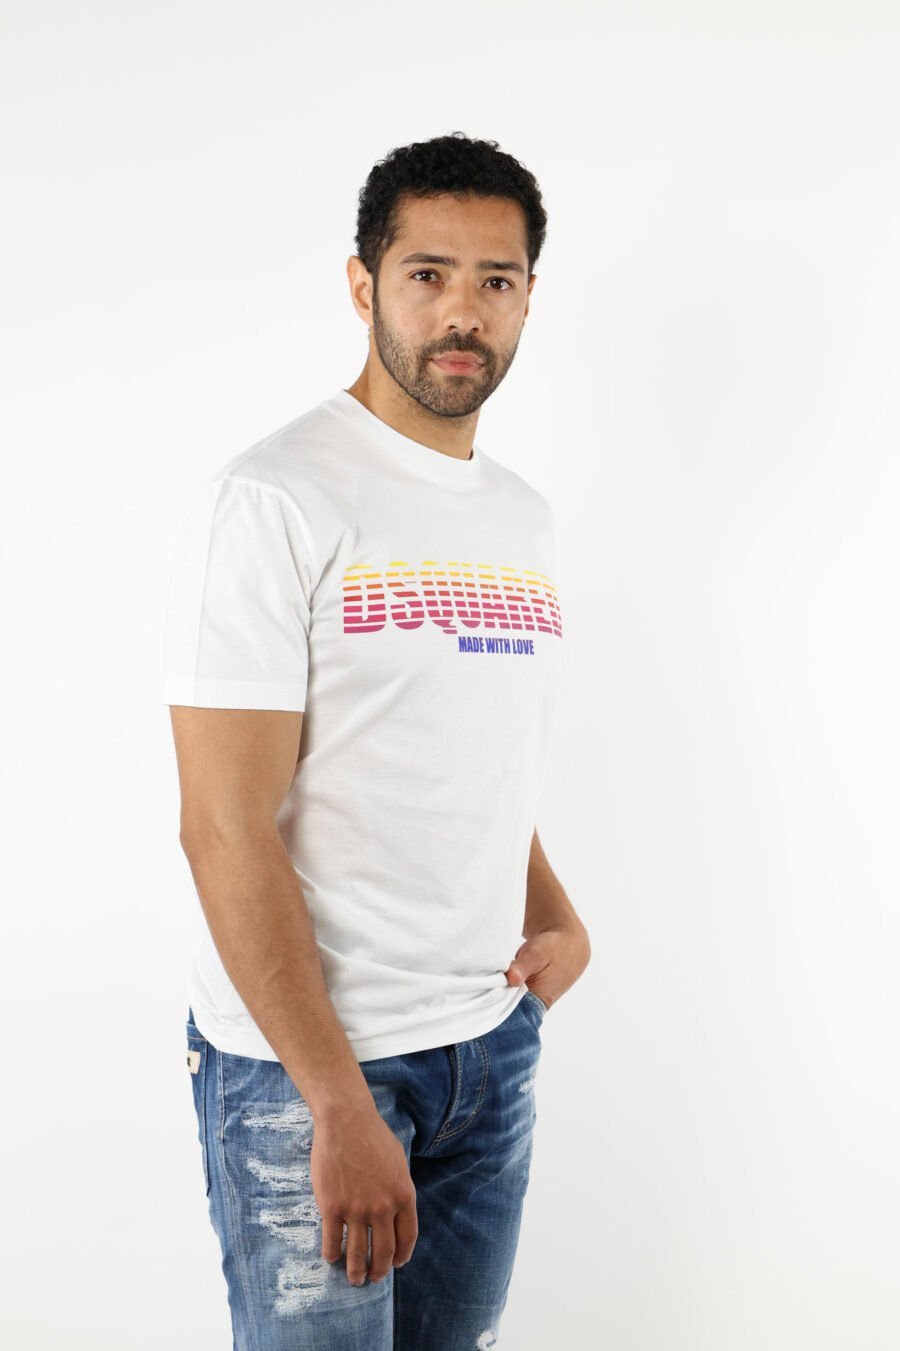 Camiseta blanca con maxilogo multicolor retro - 111181